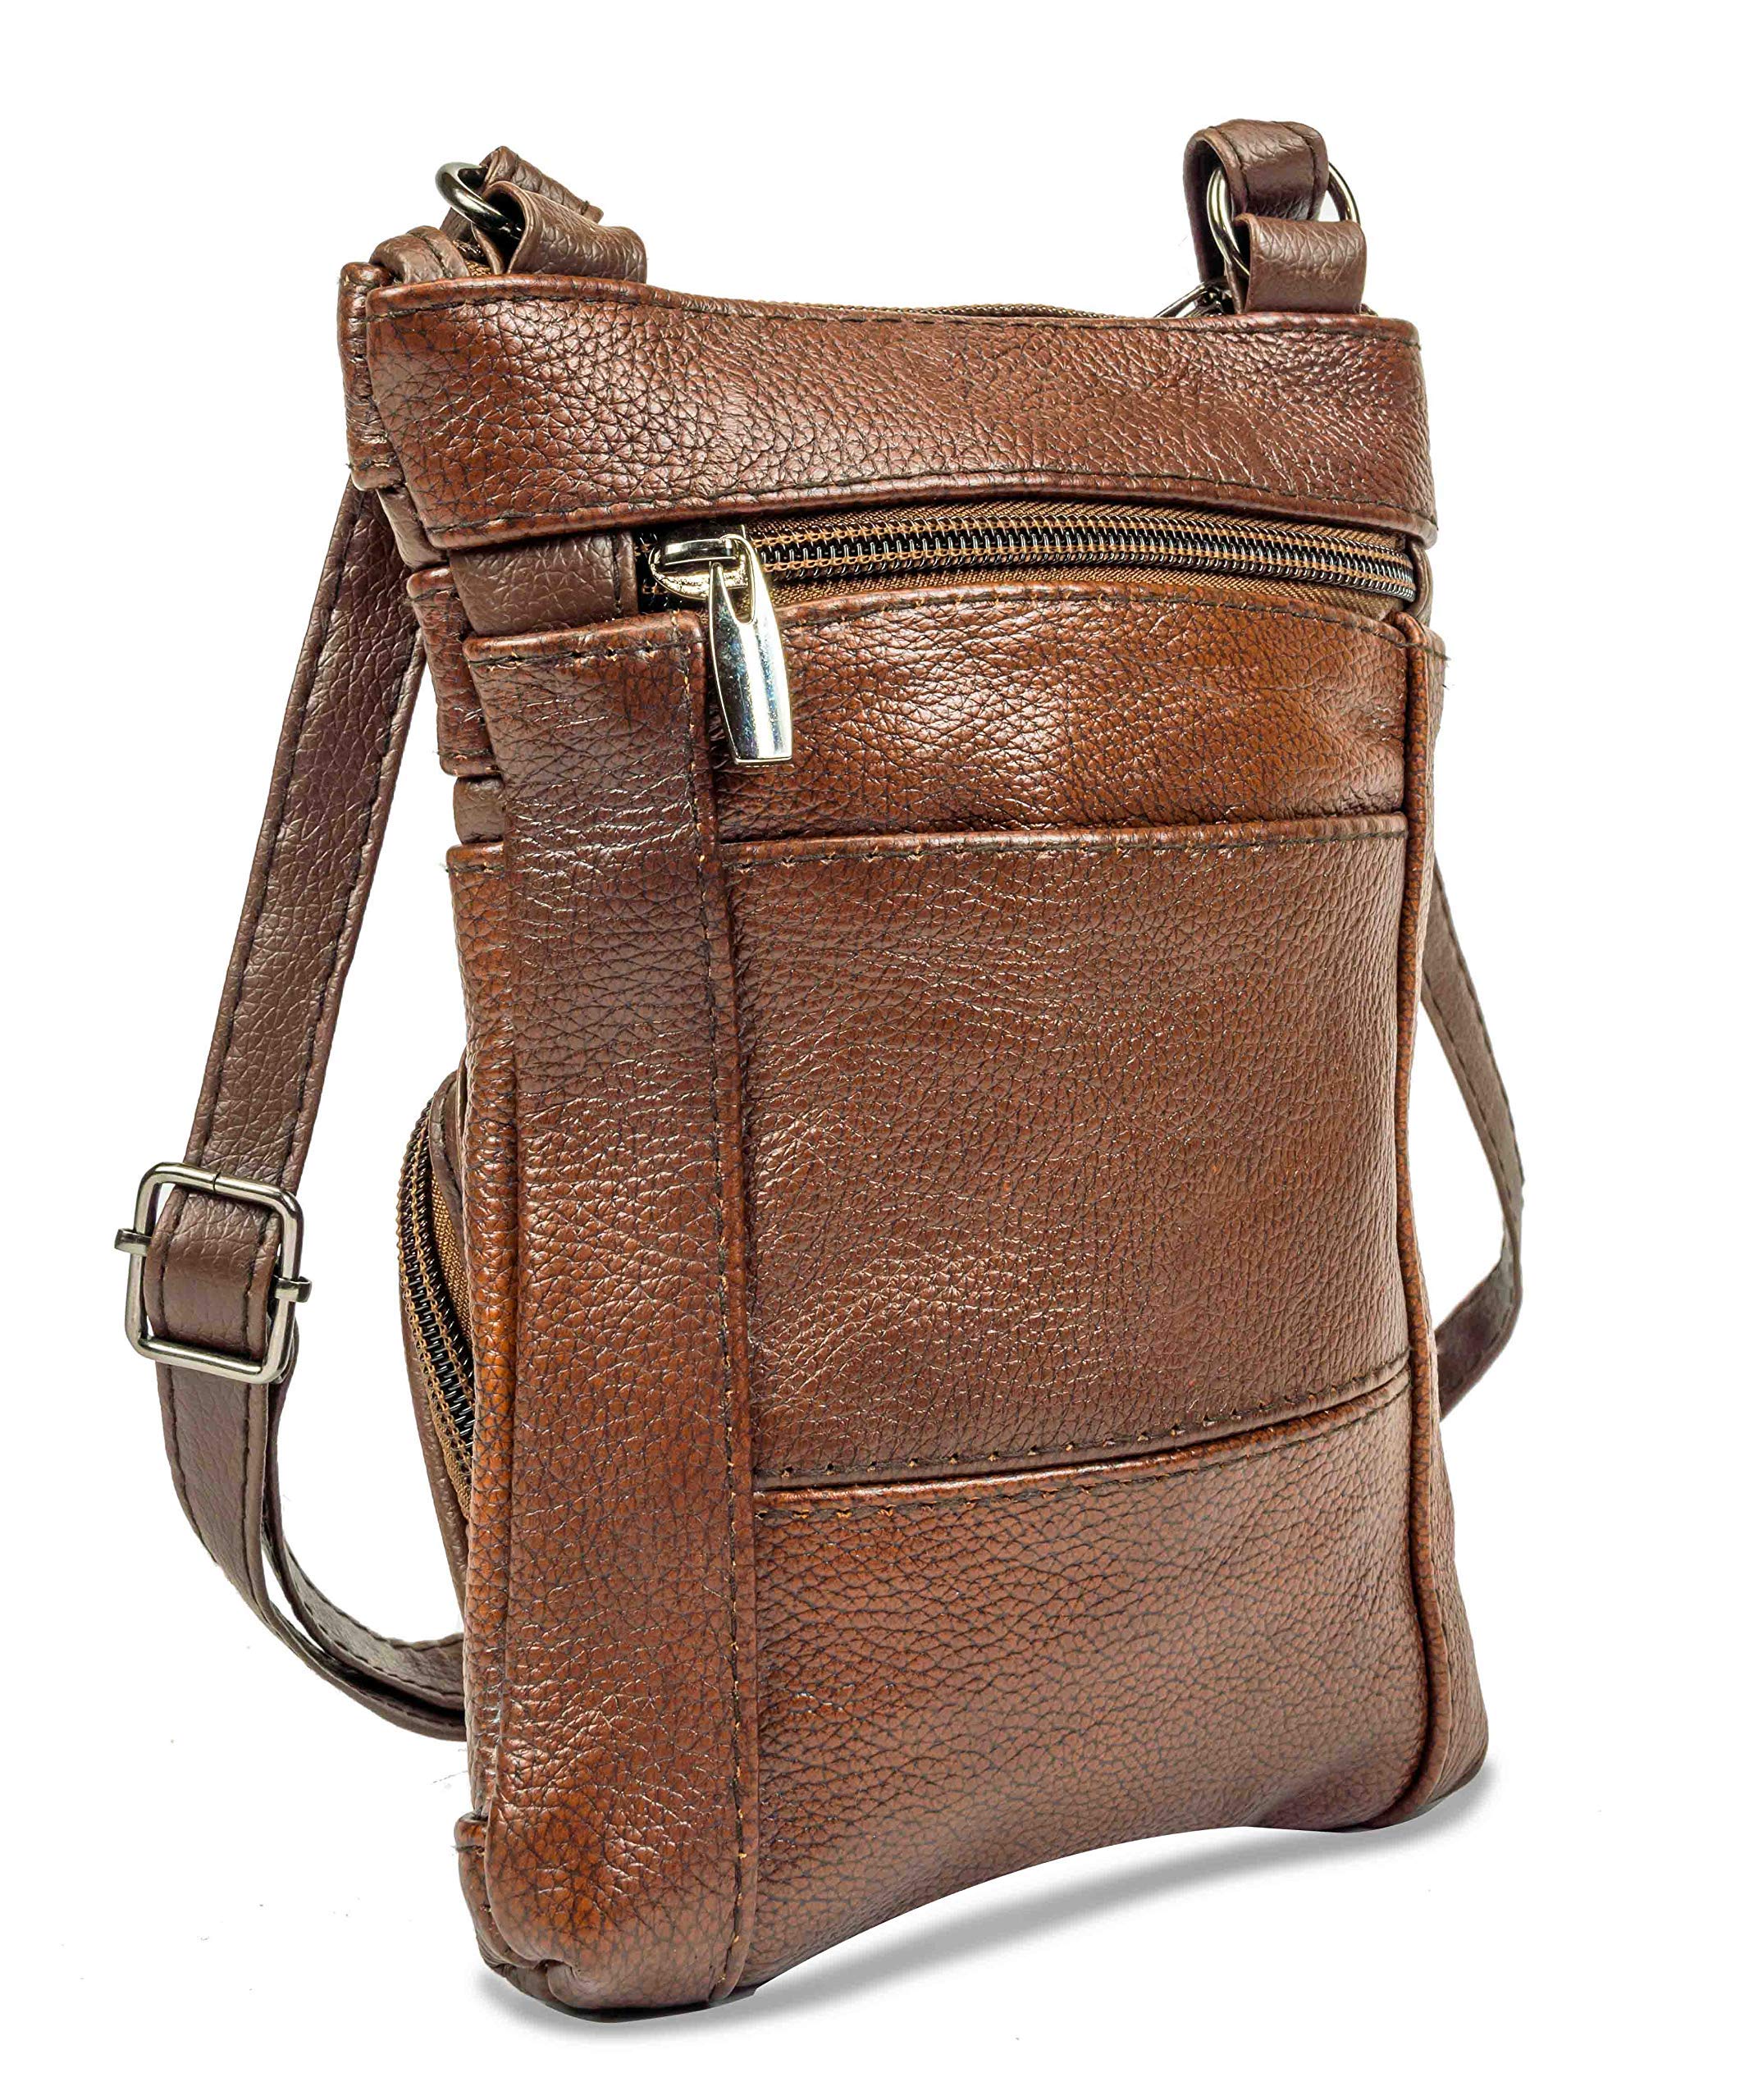 Krediz leather crossbody bags for women, Multi Pocket crossbody purse with Adjustable Strap, Soft & Durable Leather Purse